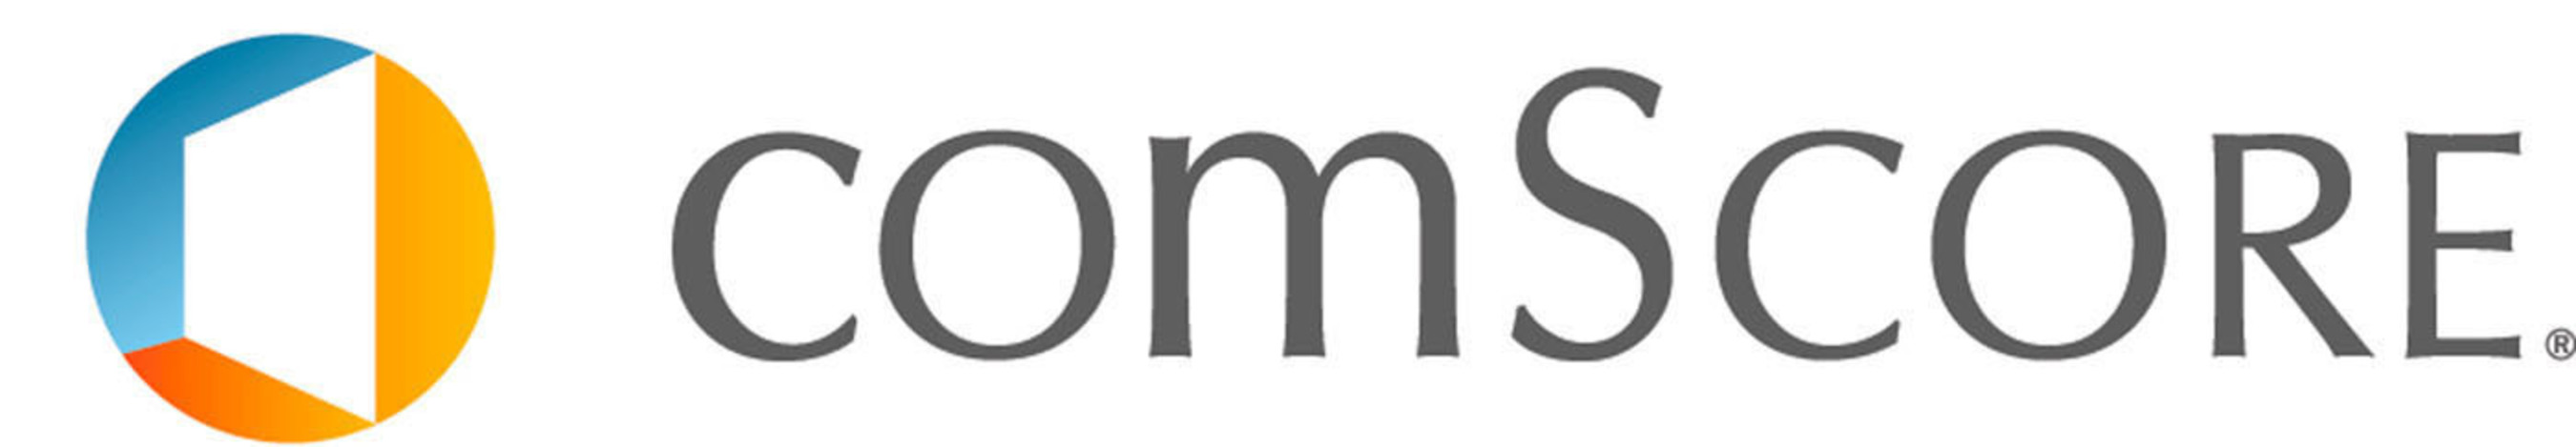 comScore logo. (PRNewsFoto/Comscore Networks)